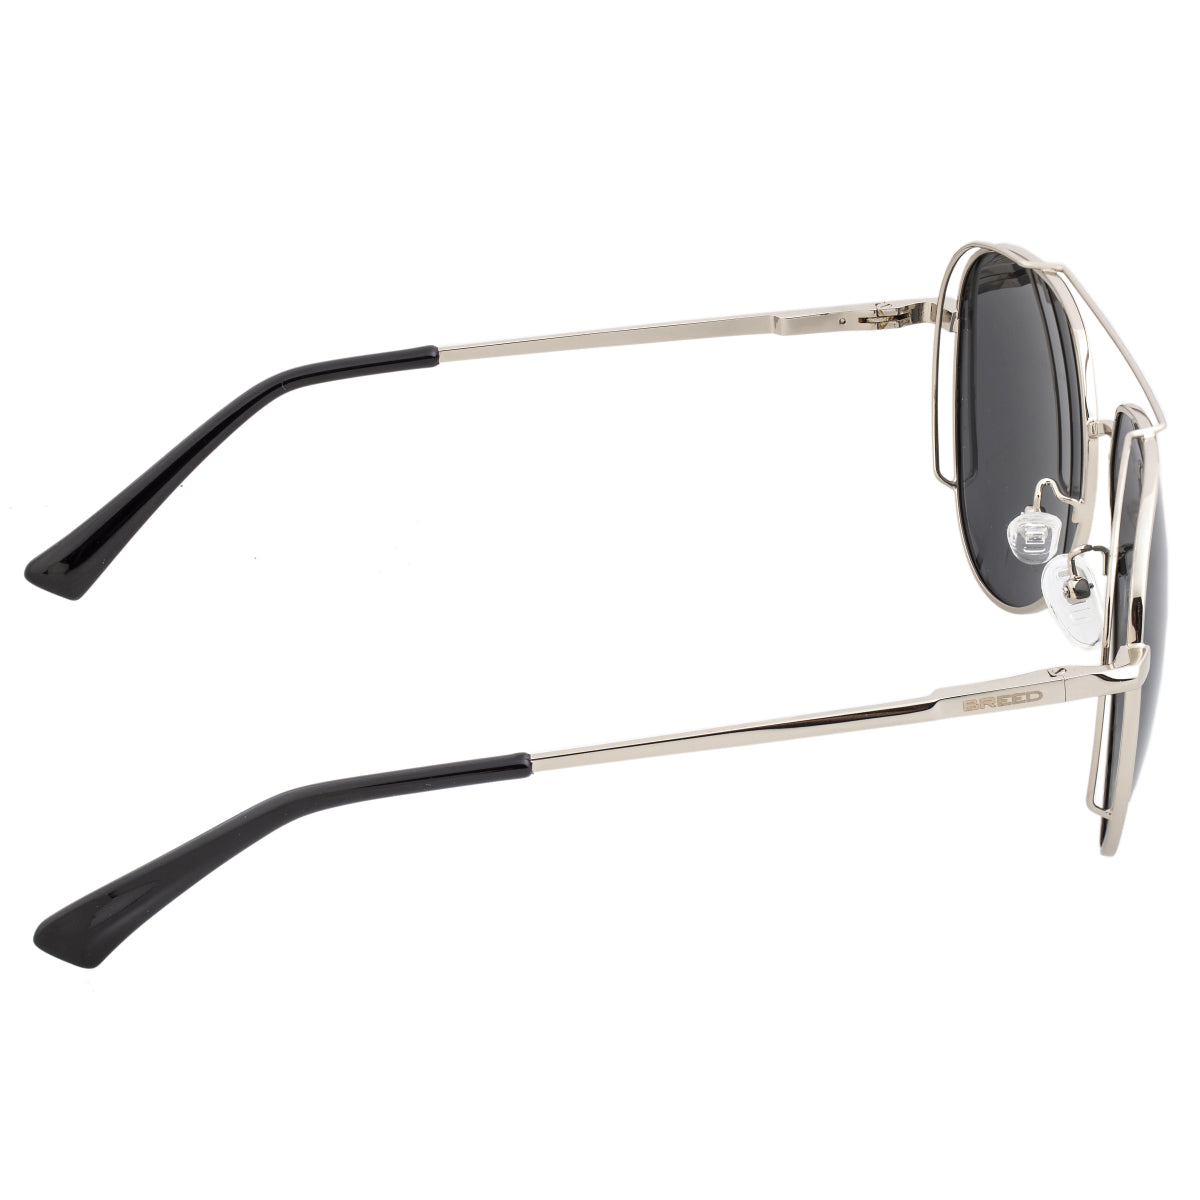 Breed Lyra Polarized Sunglasses - Silver/Black - BSG061SL